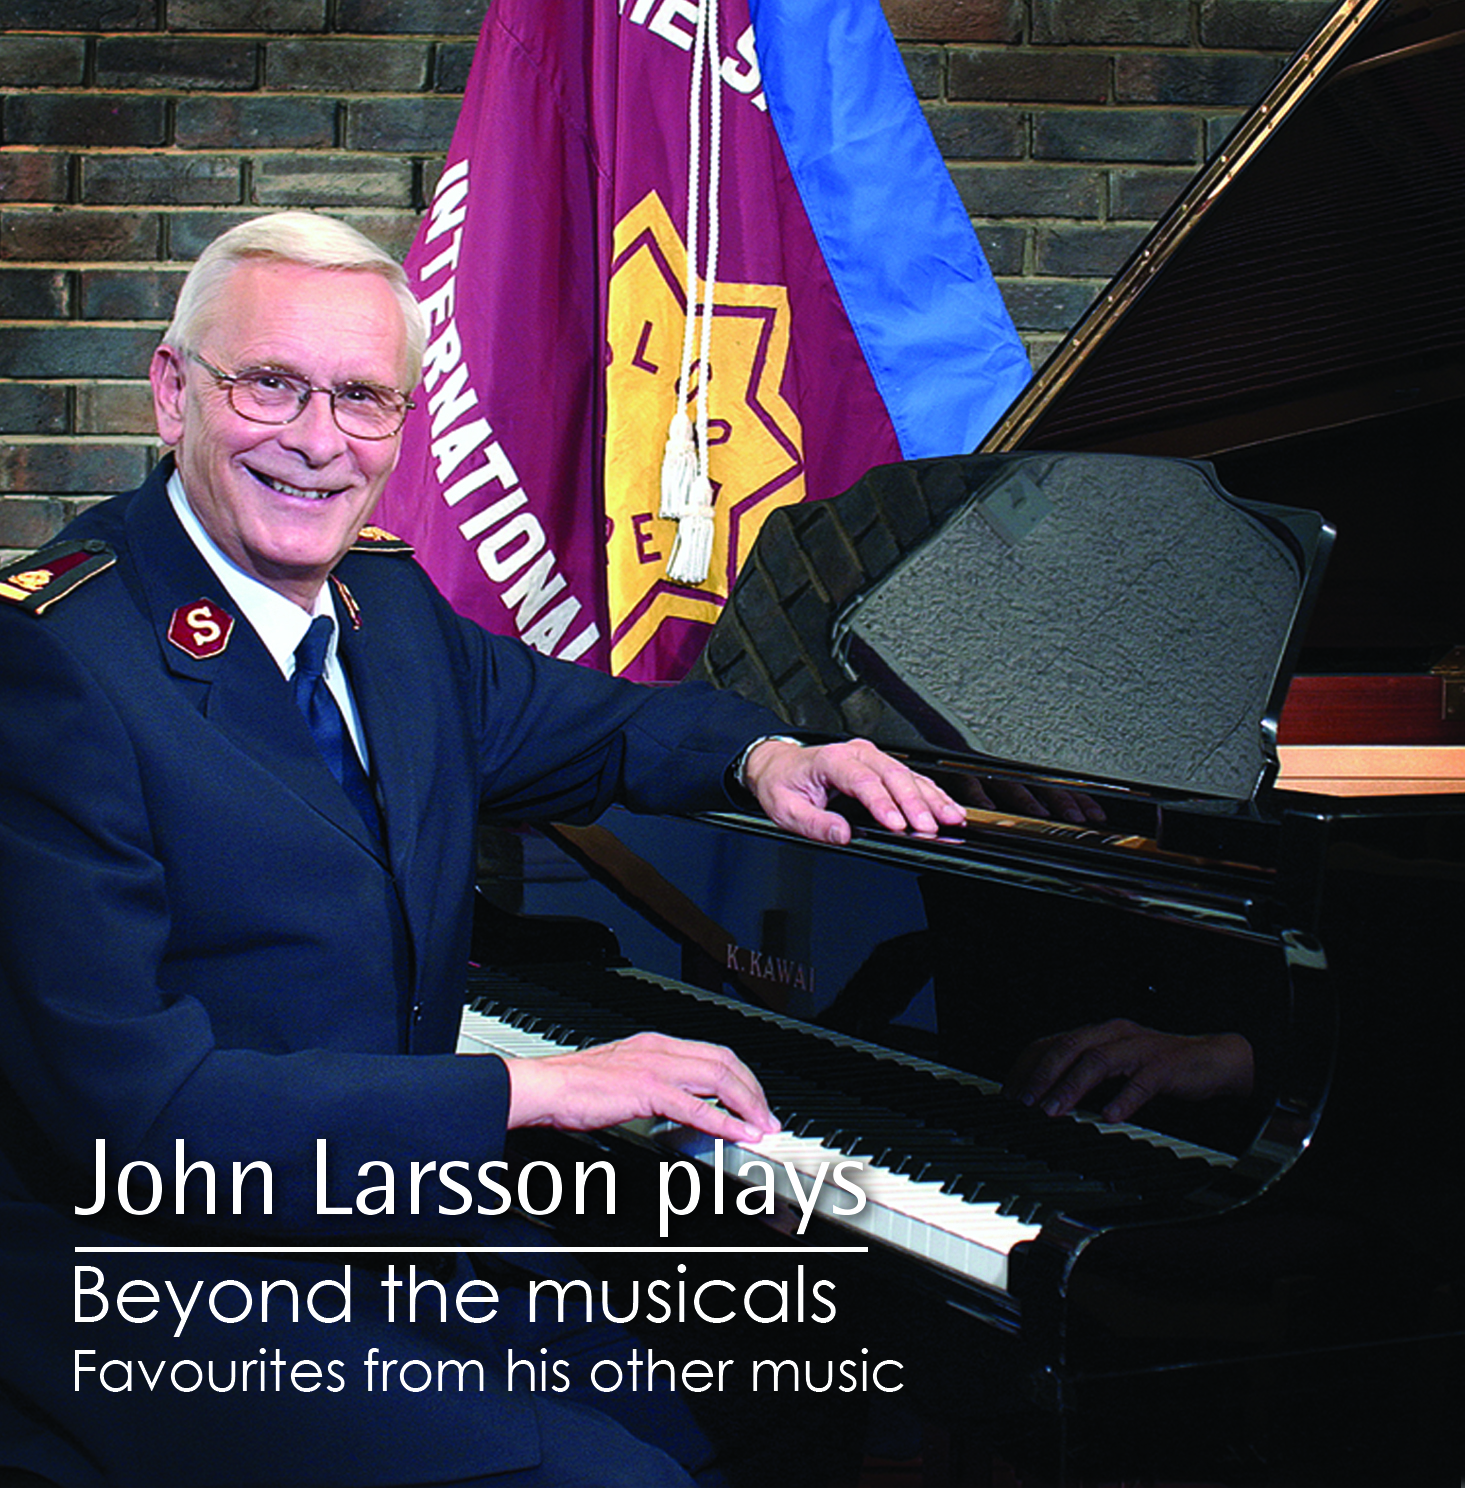 John Larsson Plays - Beyond the musicals - Download